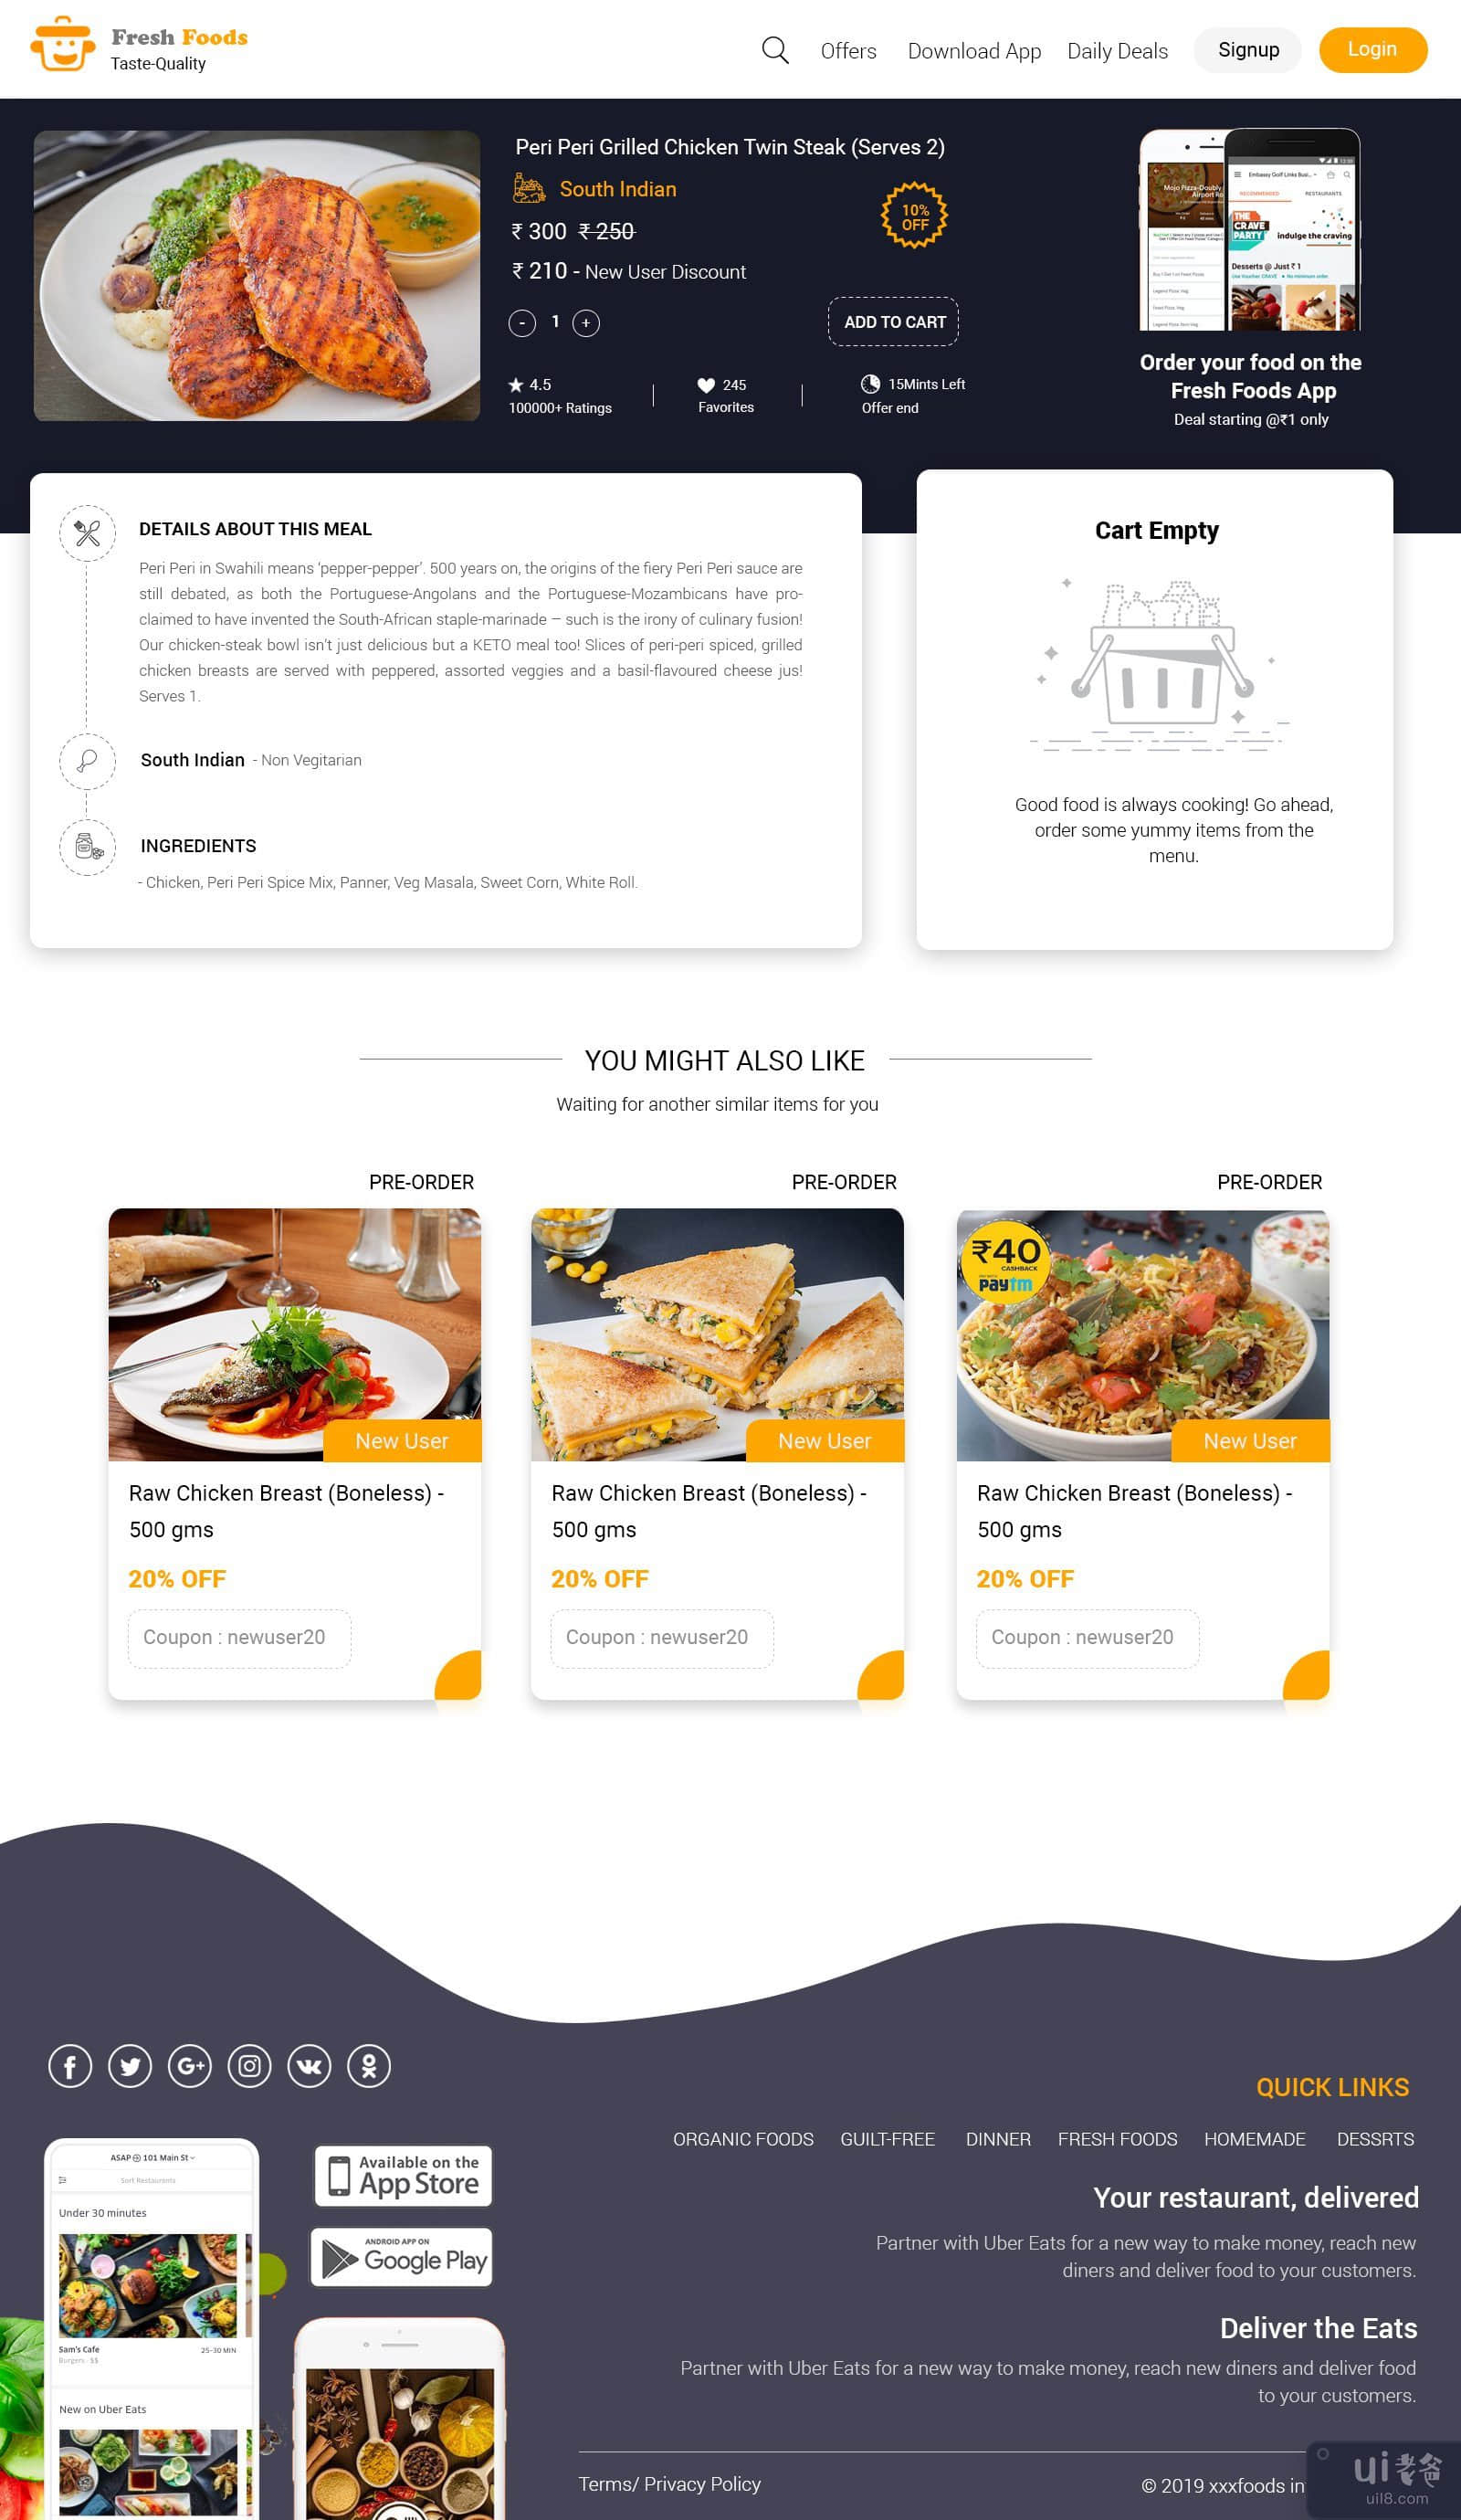 食品网站登陆页面(Food Website Landing page)插图